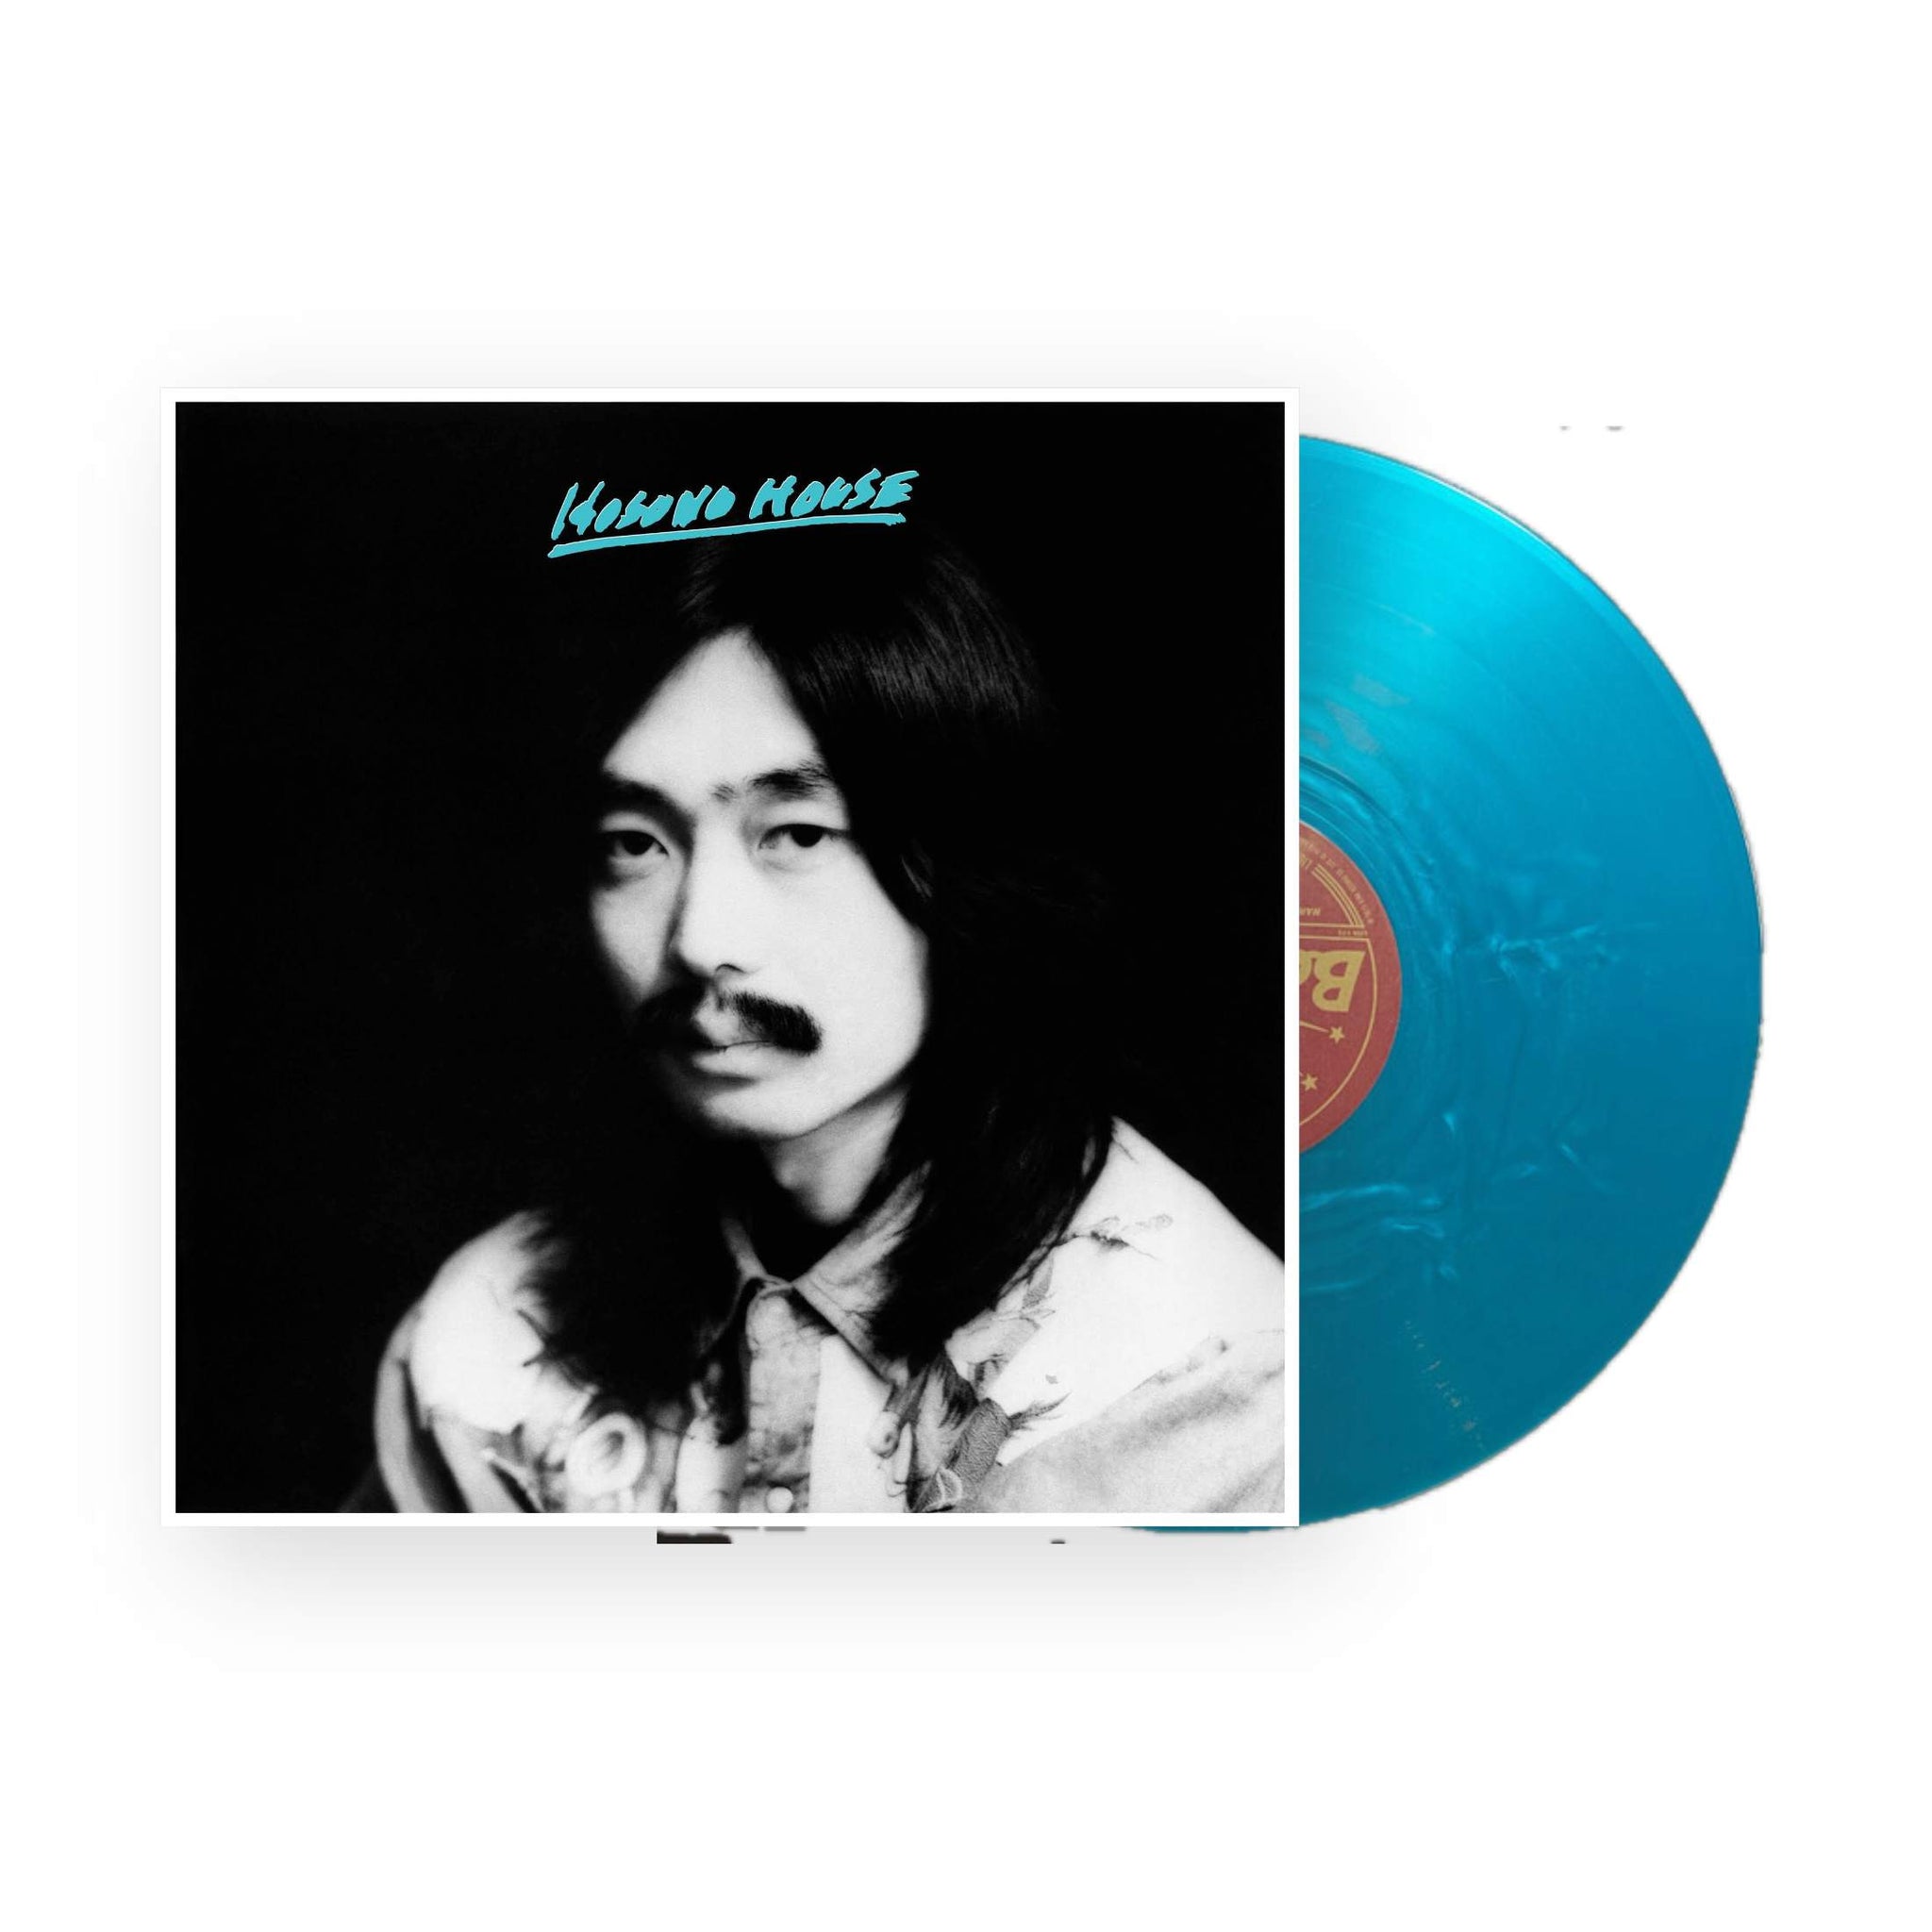 Haruomi Hosono - Hosono House LP (Blue Seafoam Vinyl)